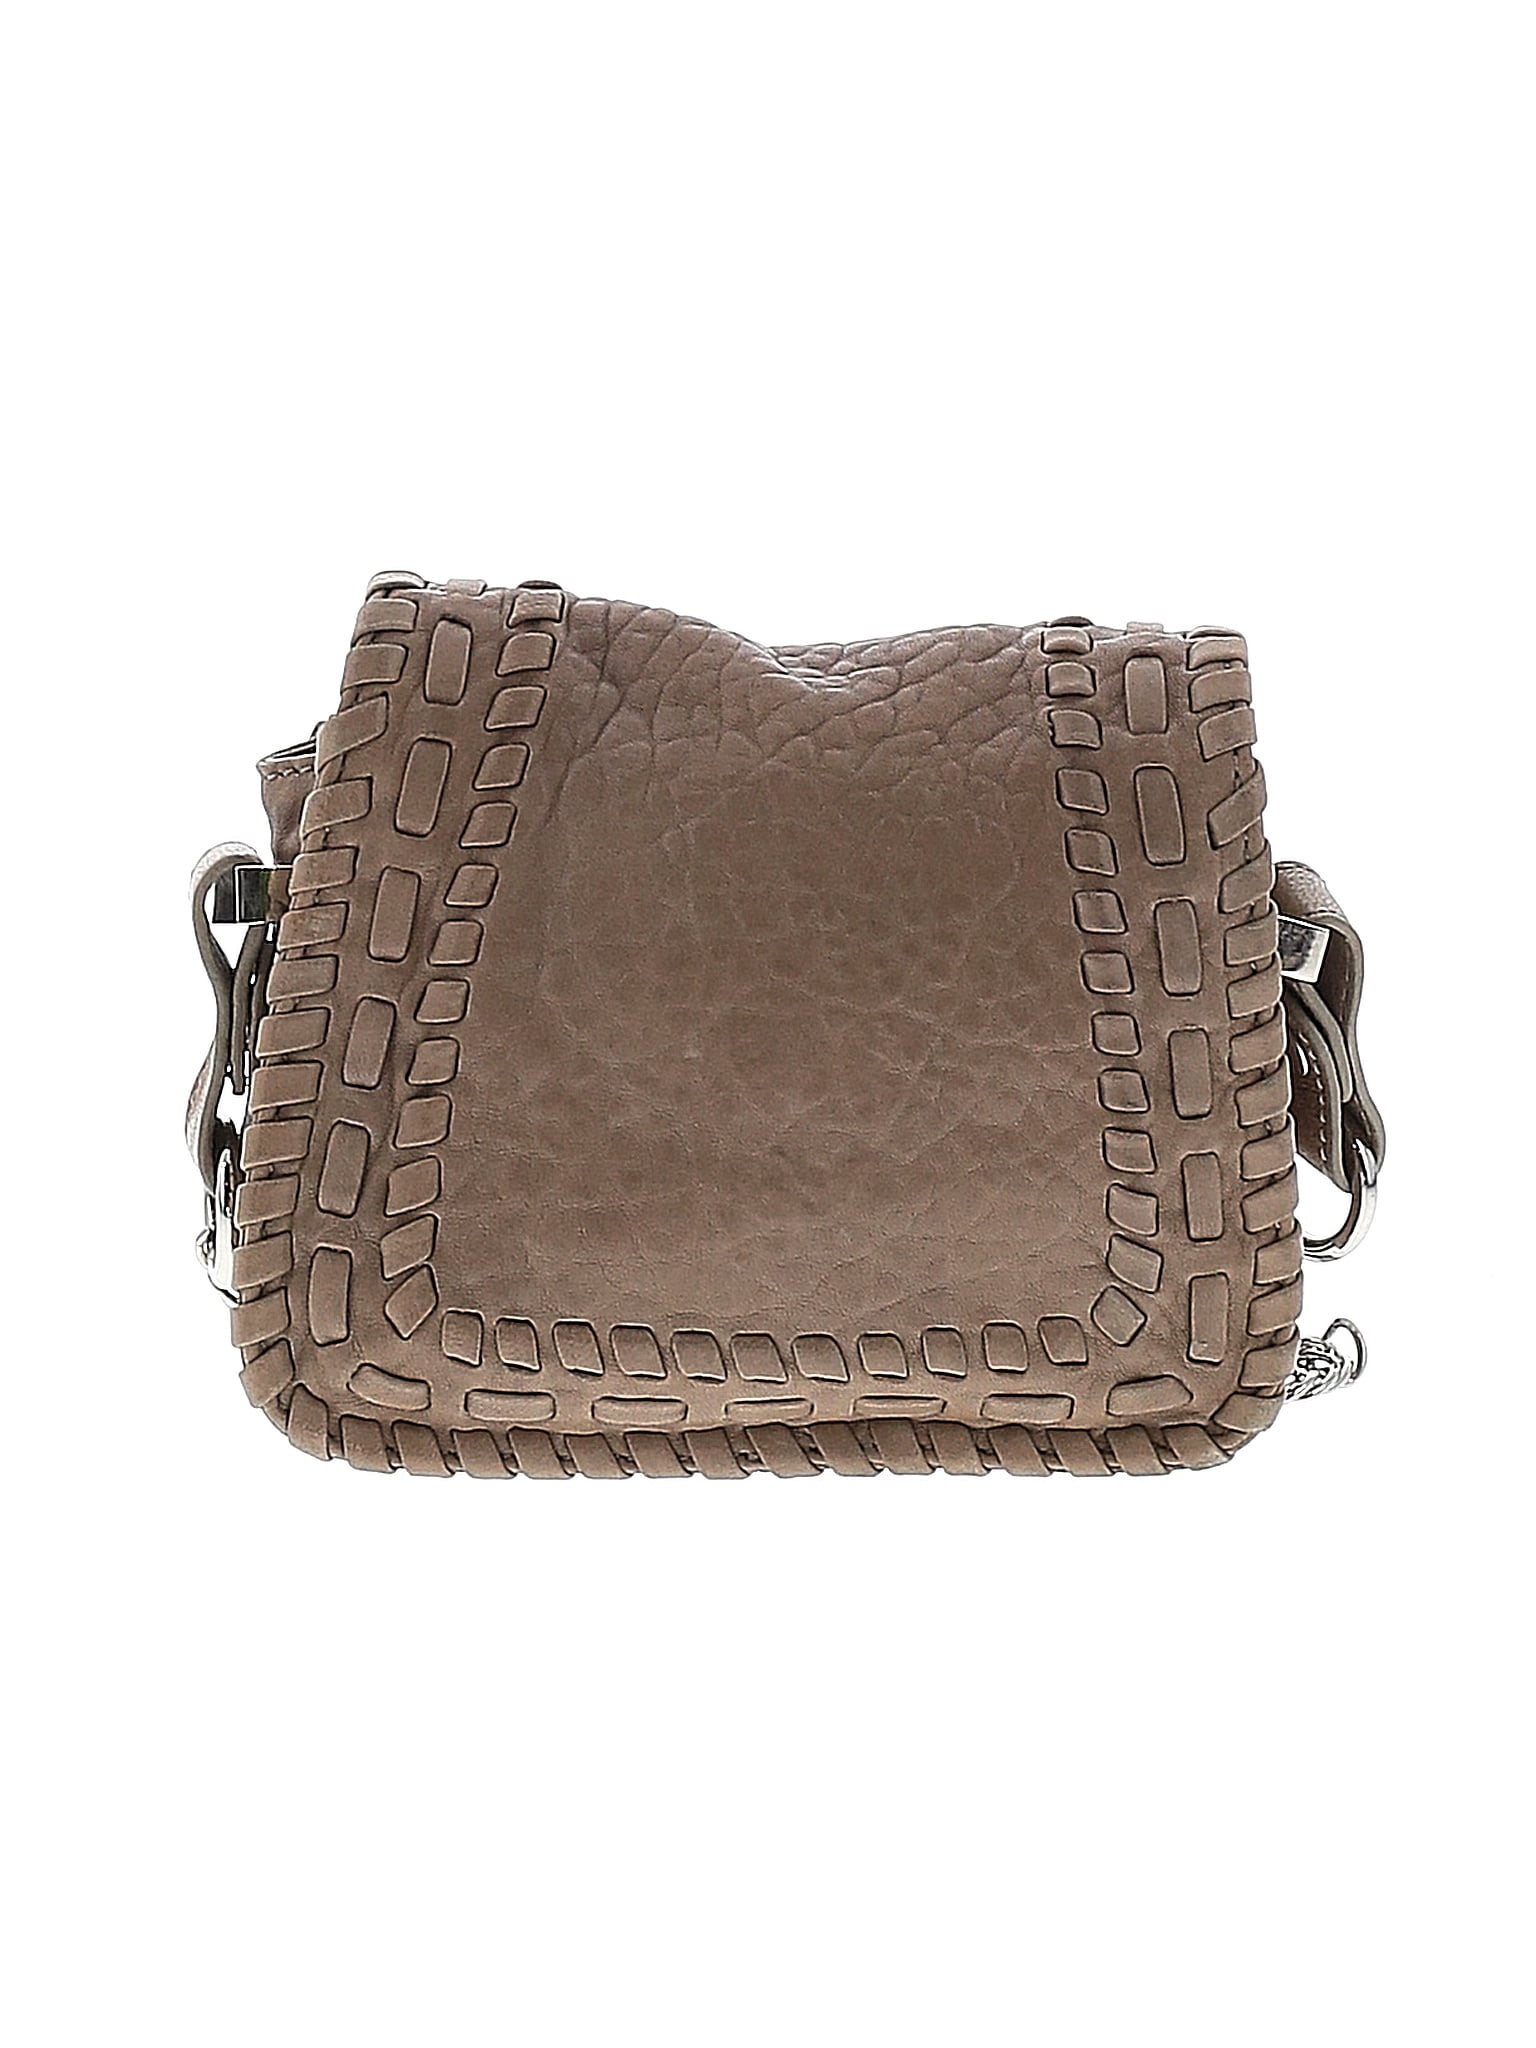 Treesje Leather Satchel: Brown Print Bags, thredUP